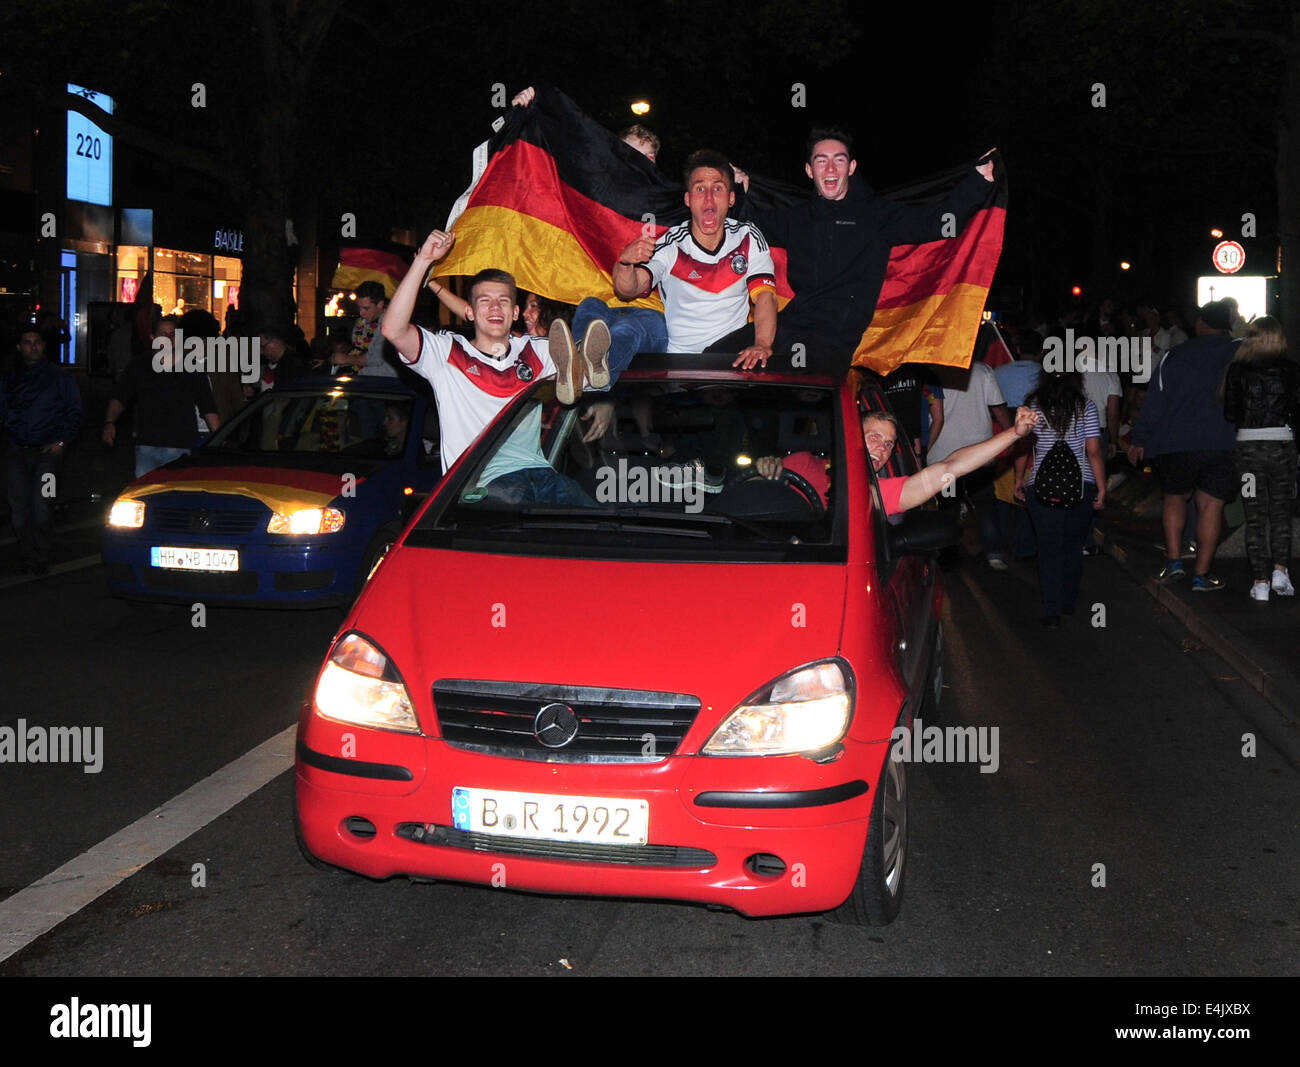 Berlin, Germany. 14th July, 2014. Germans celebrating World Cup win on  Kurfuerstendamm boulevard in Berlin Credit: David Crossland/Alamy Live News  Stock Photo - Alamy